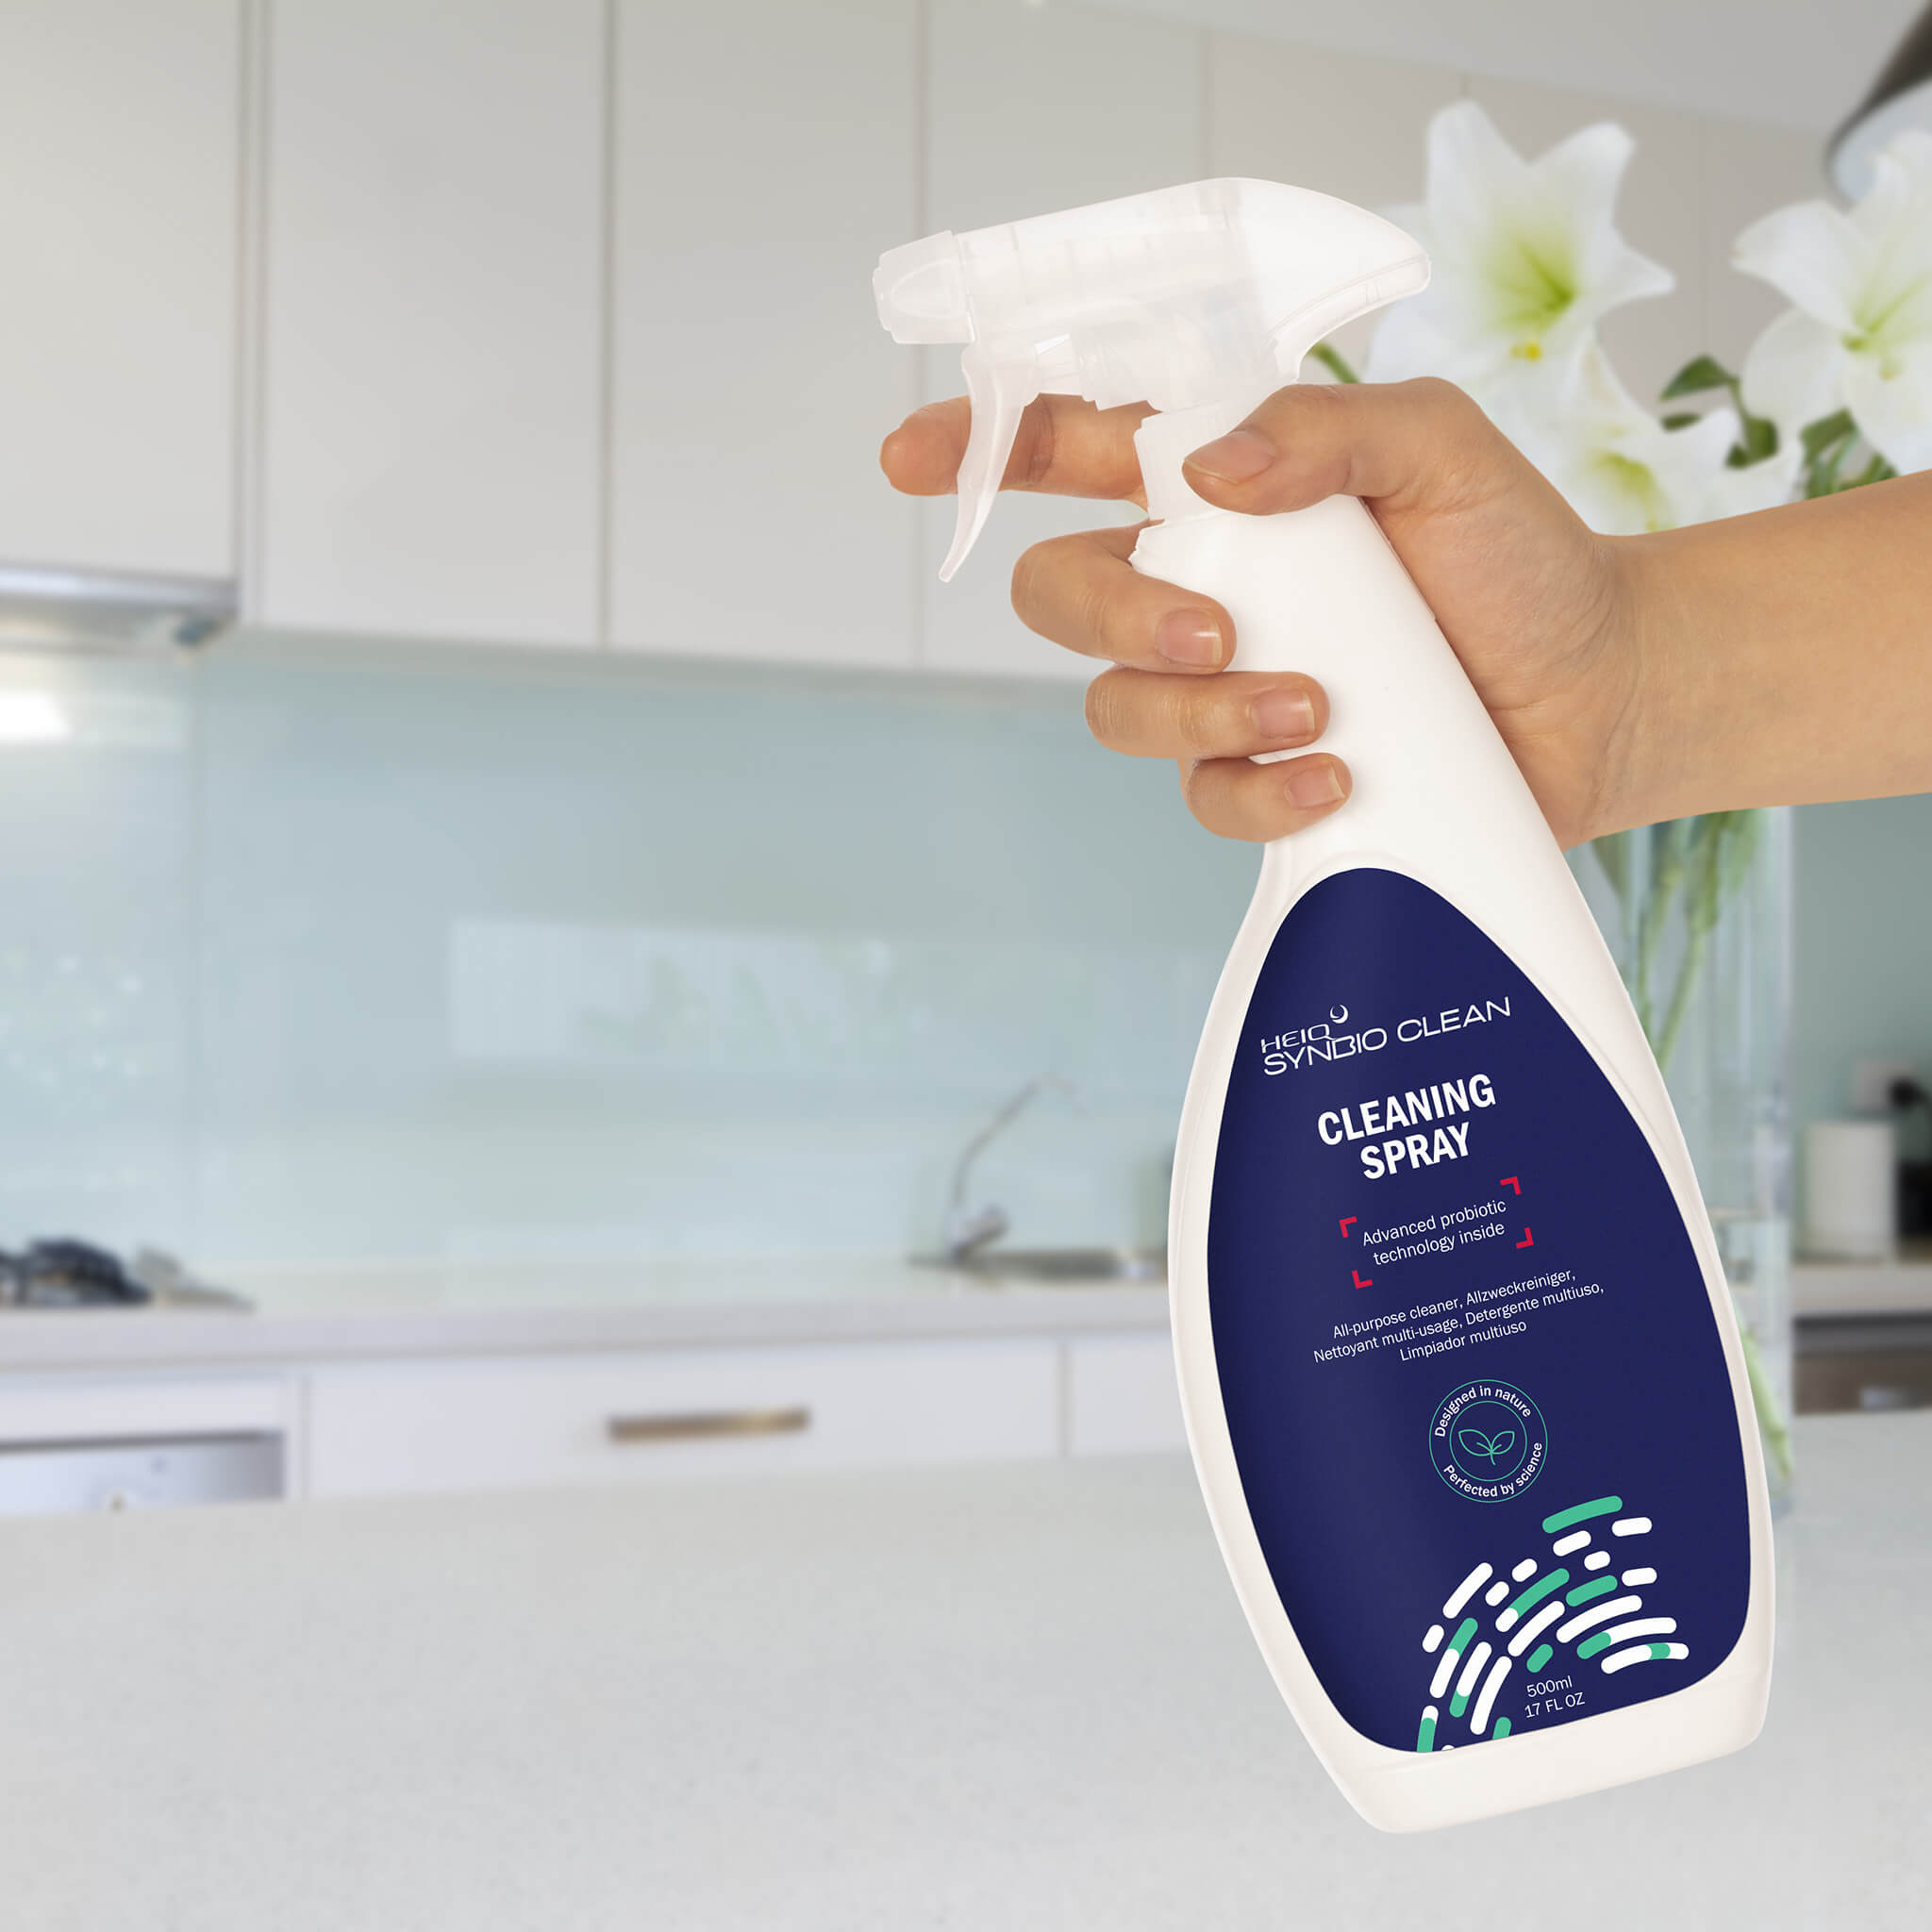 HeiQ Synbio Clean Cleaning Spray